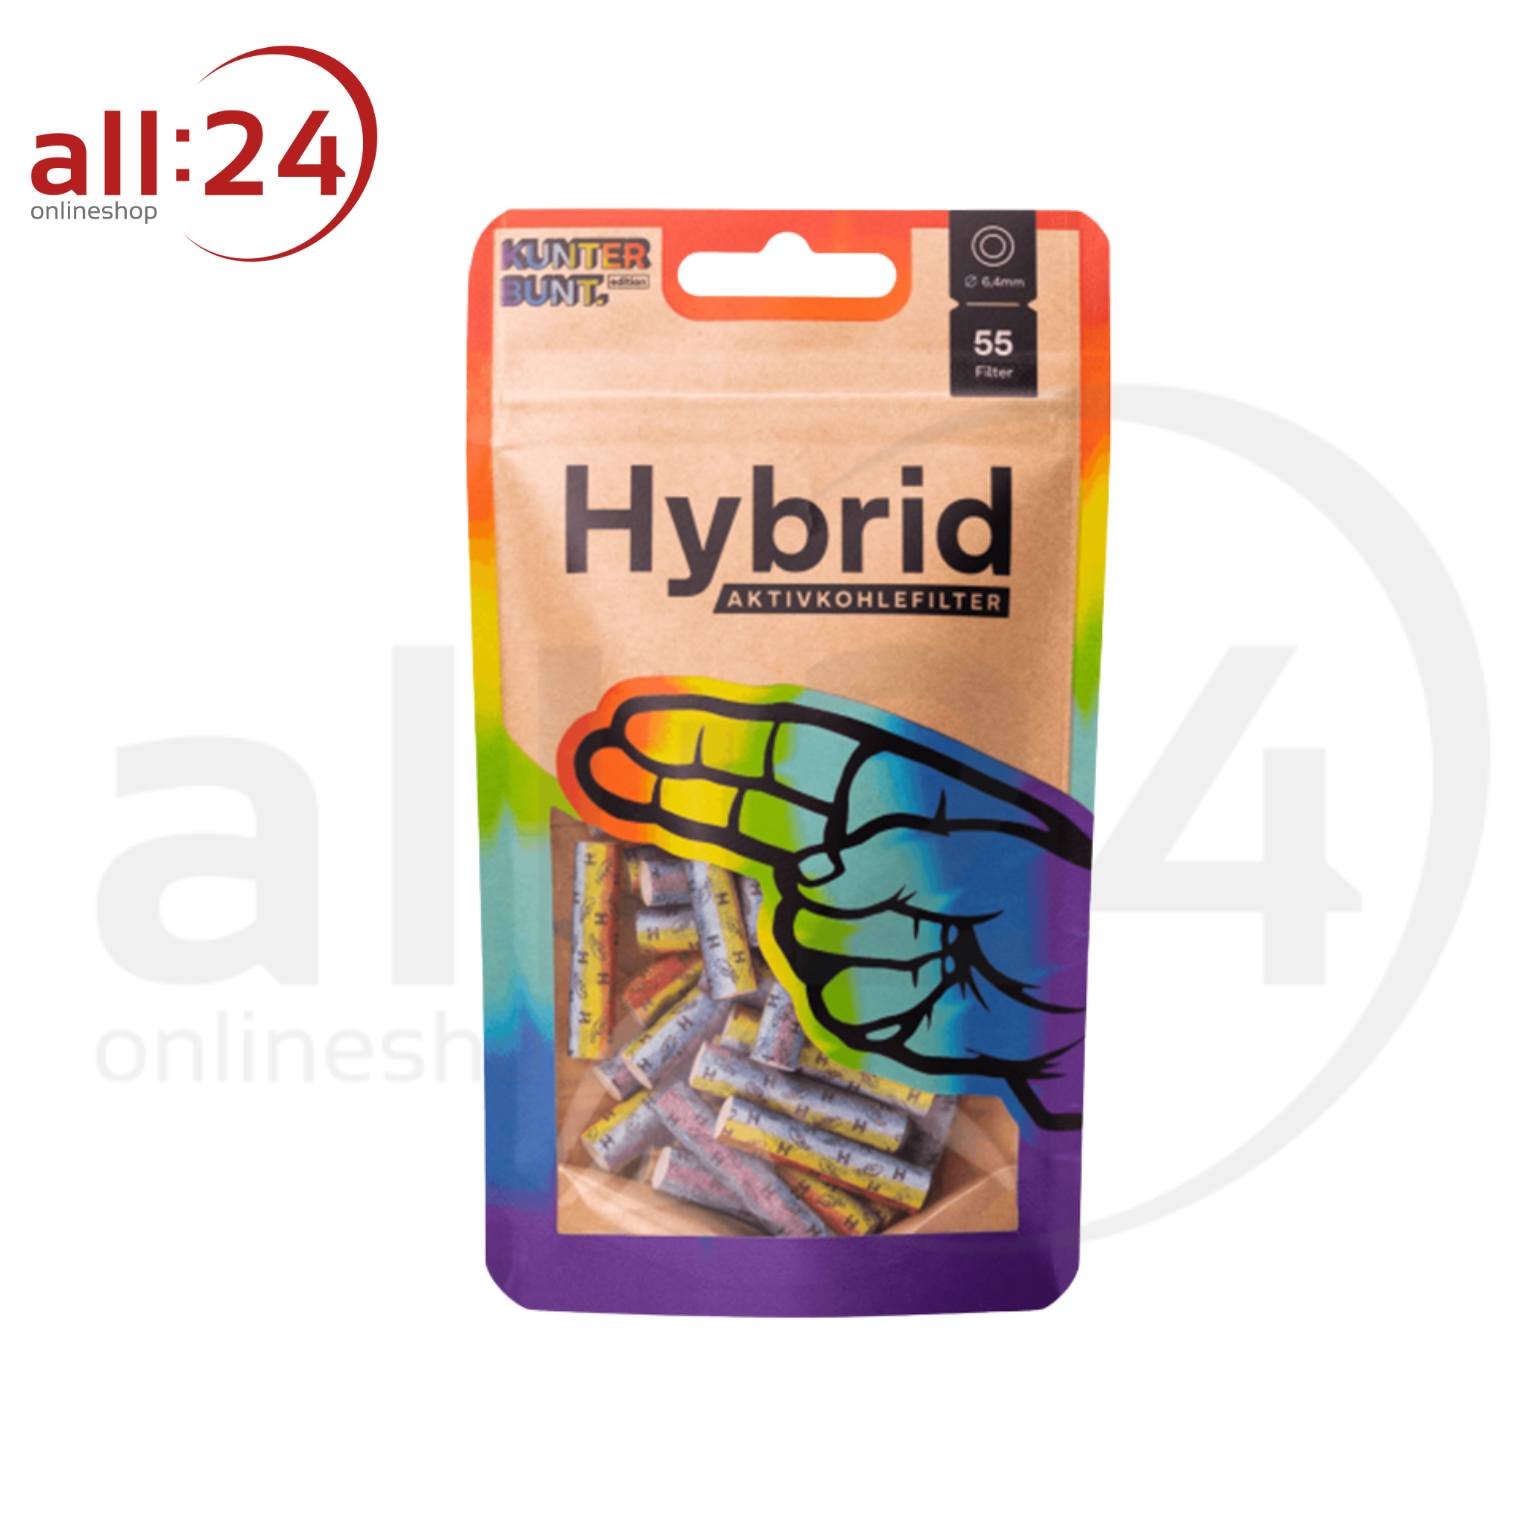 Hybrid Supreme Filter Rainbow Aktivkohlefilter, Display 10 Packungen 